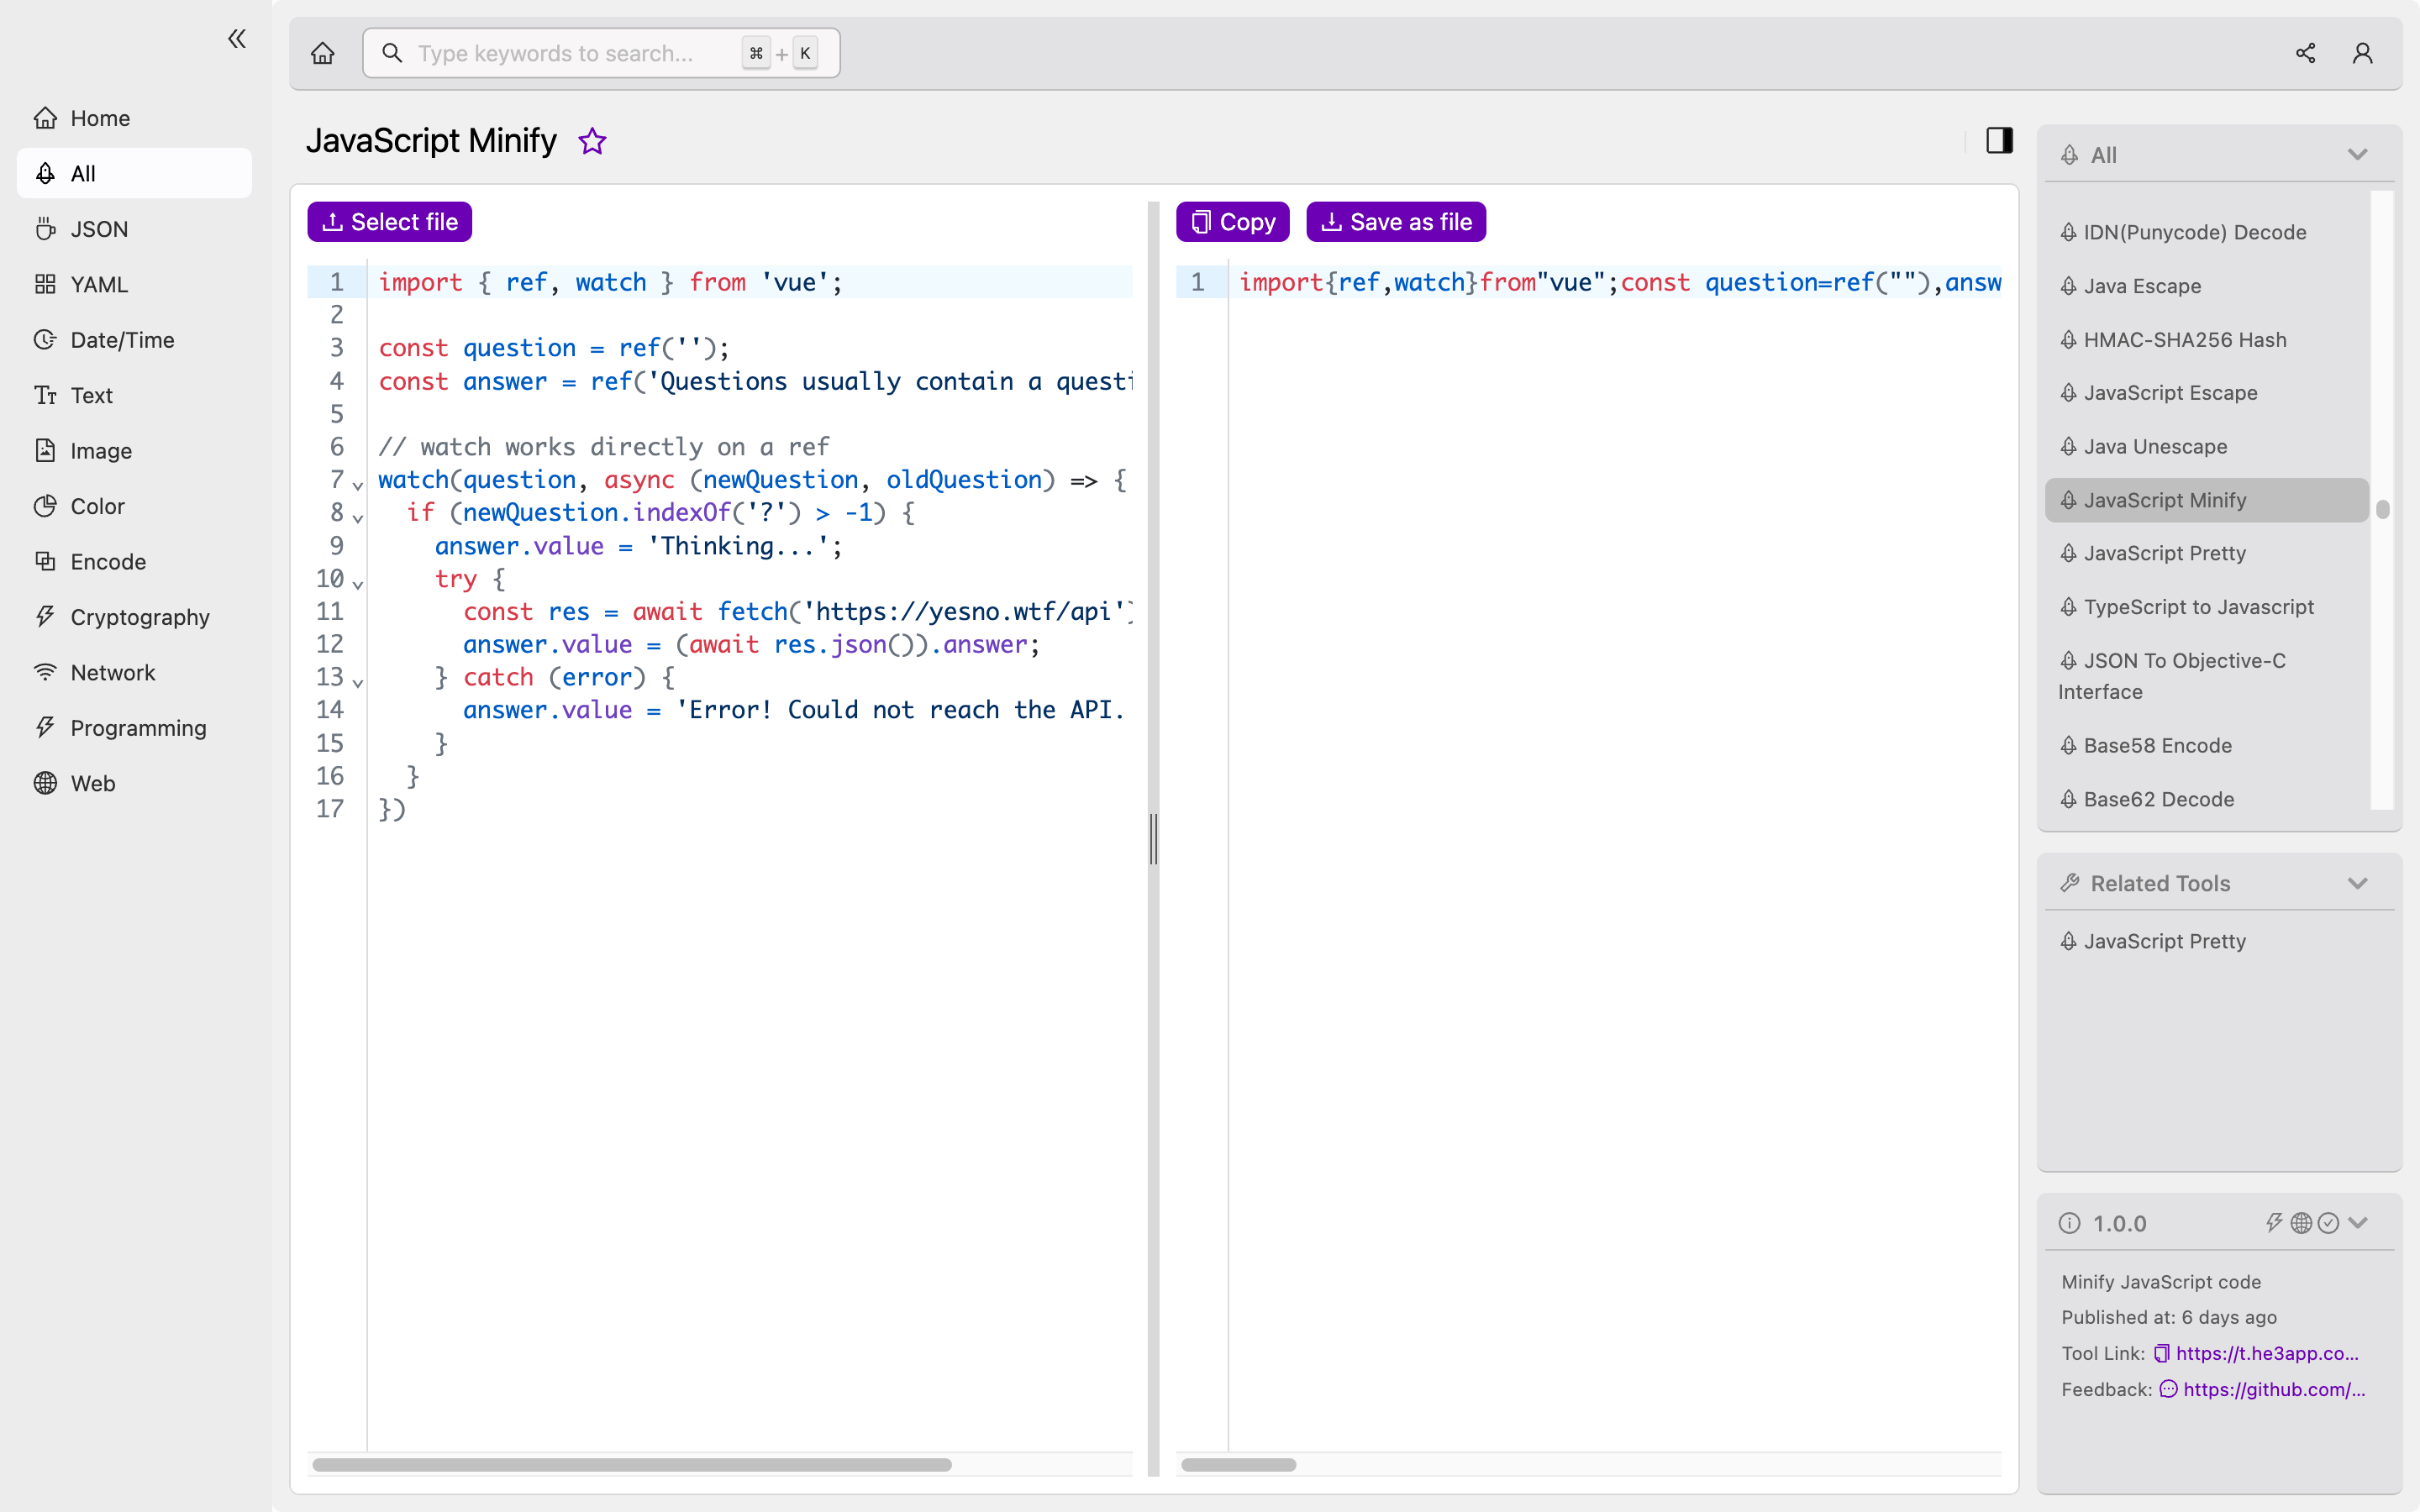 JavaScript Minify